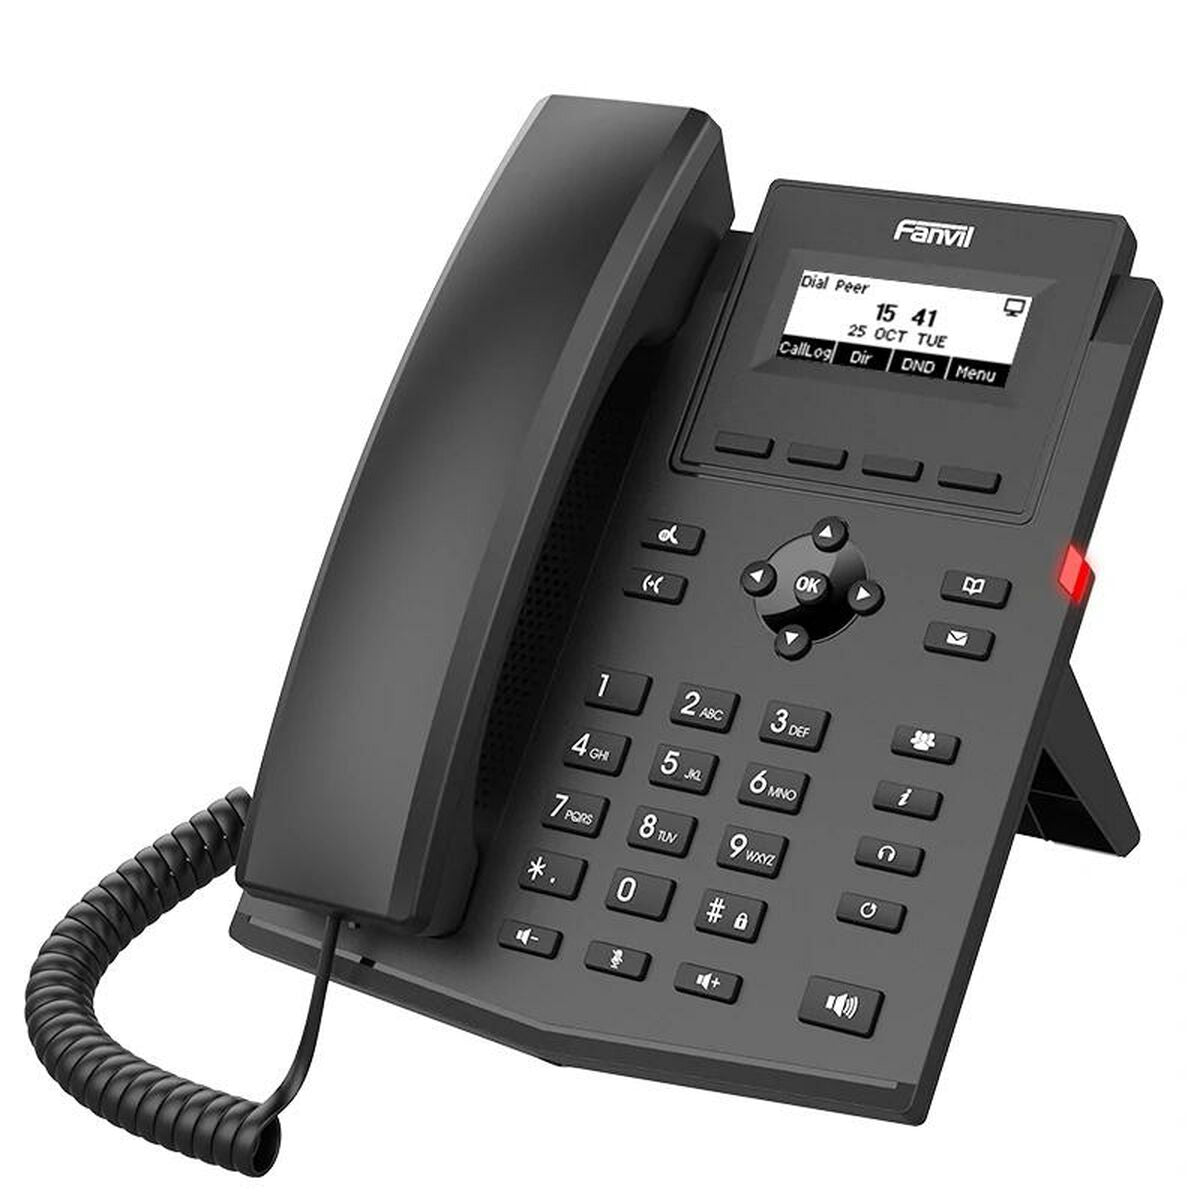 Landline Telephone Fanvil X301P, Fanvil, Electronics, Landline telephones and accessories, landline-telephone-fanvil-x301p, Brand_Fanvil, category-reference-2609, category-reference-2617, category-reference-2619, category-reference-t-18372, category-reference-t-19653, Condition_NEW, office, Price_50 - 100, telephones & tablets, Teleworking, RiotNook